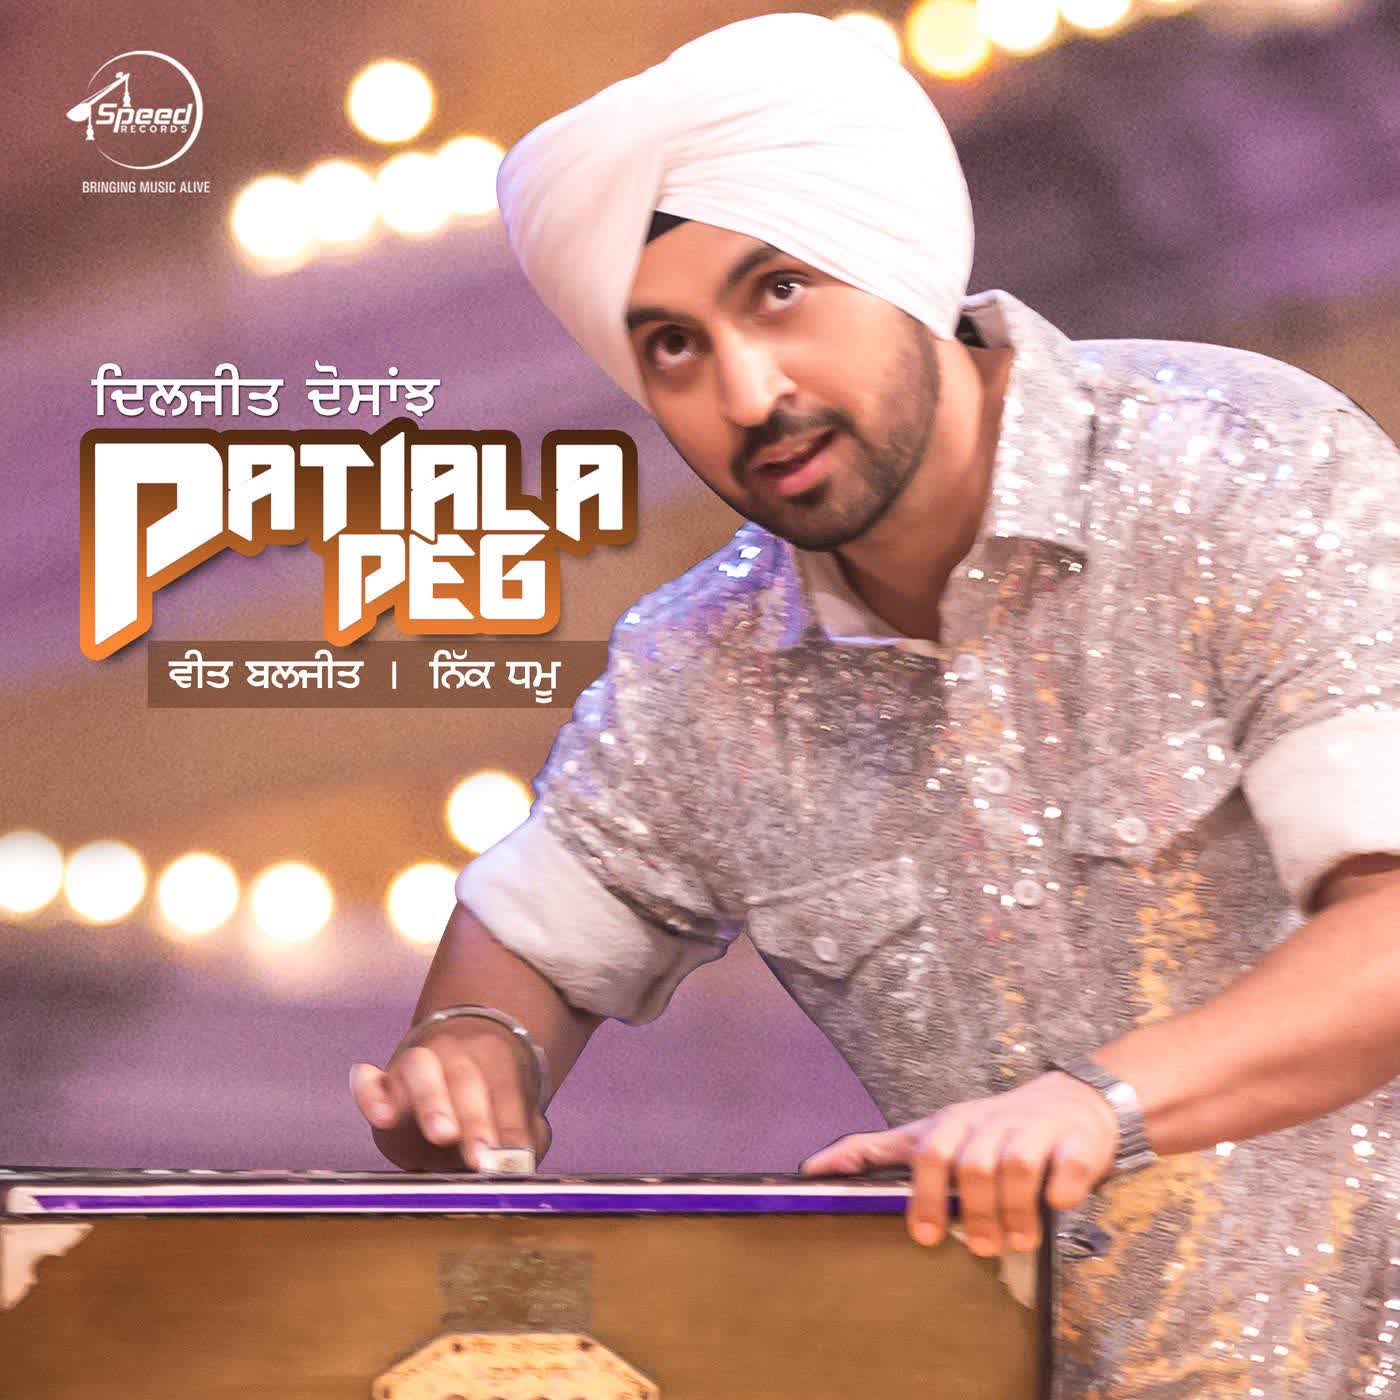 Patiala Peg Diljit Dosanjh Mp3 song download